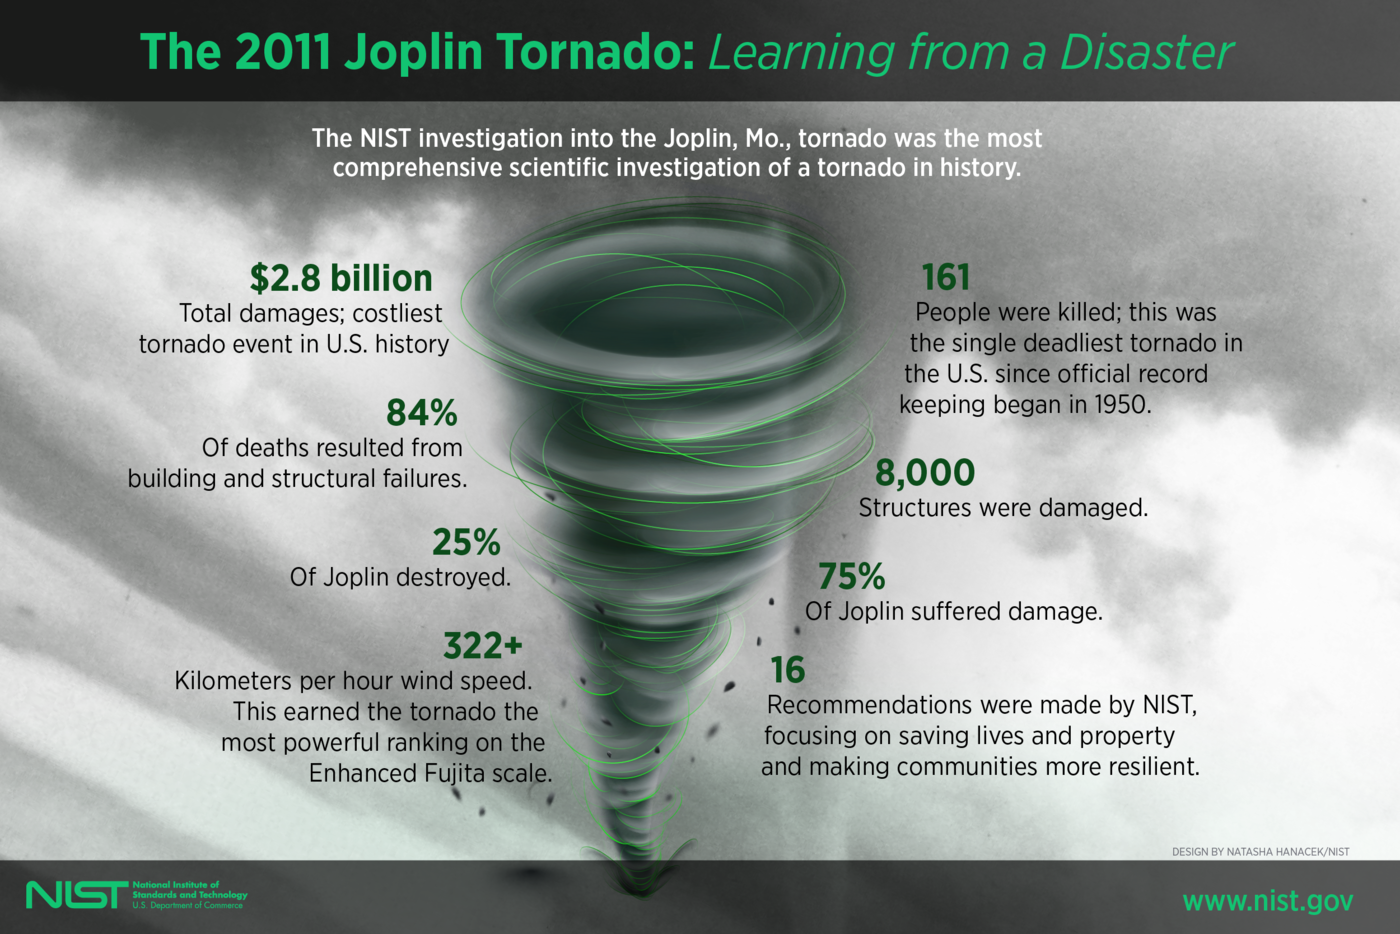 Illustration shows a tornado with statistics about the Joplin tornado's deadliness and destructiveness.